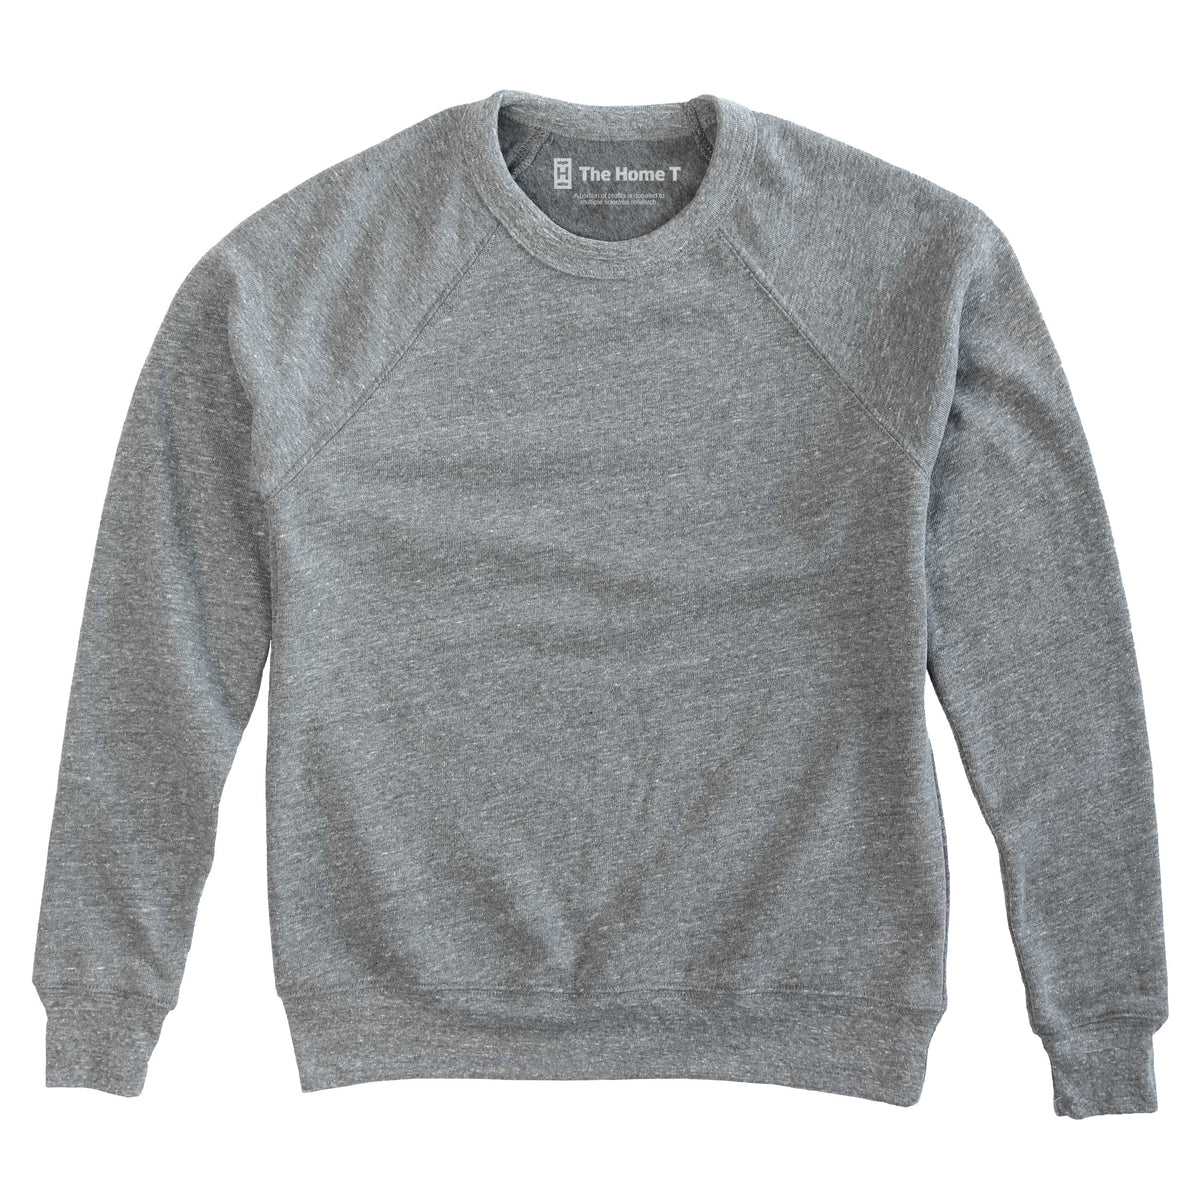 Ath Grey Custom Sweatshirt